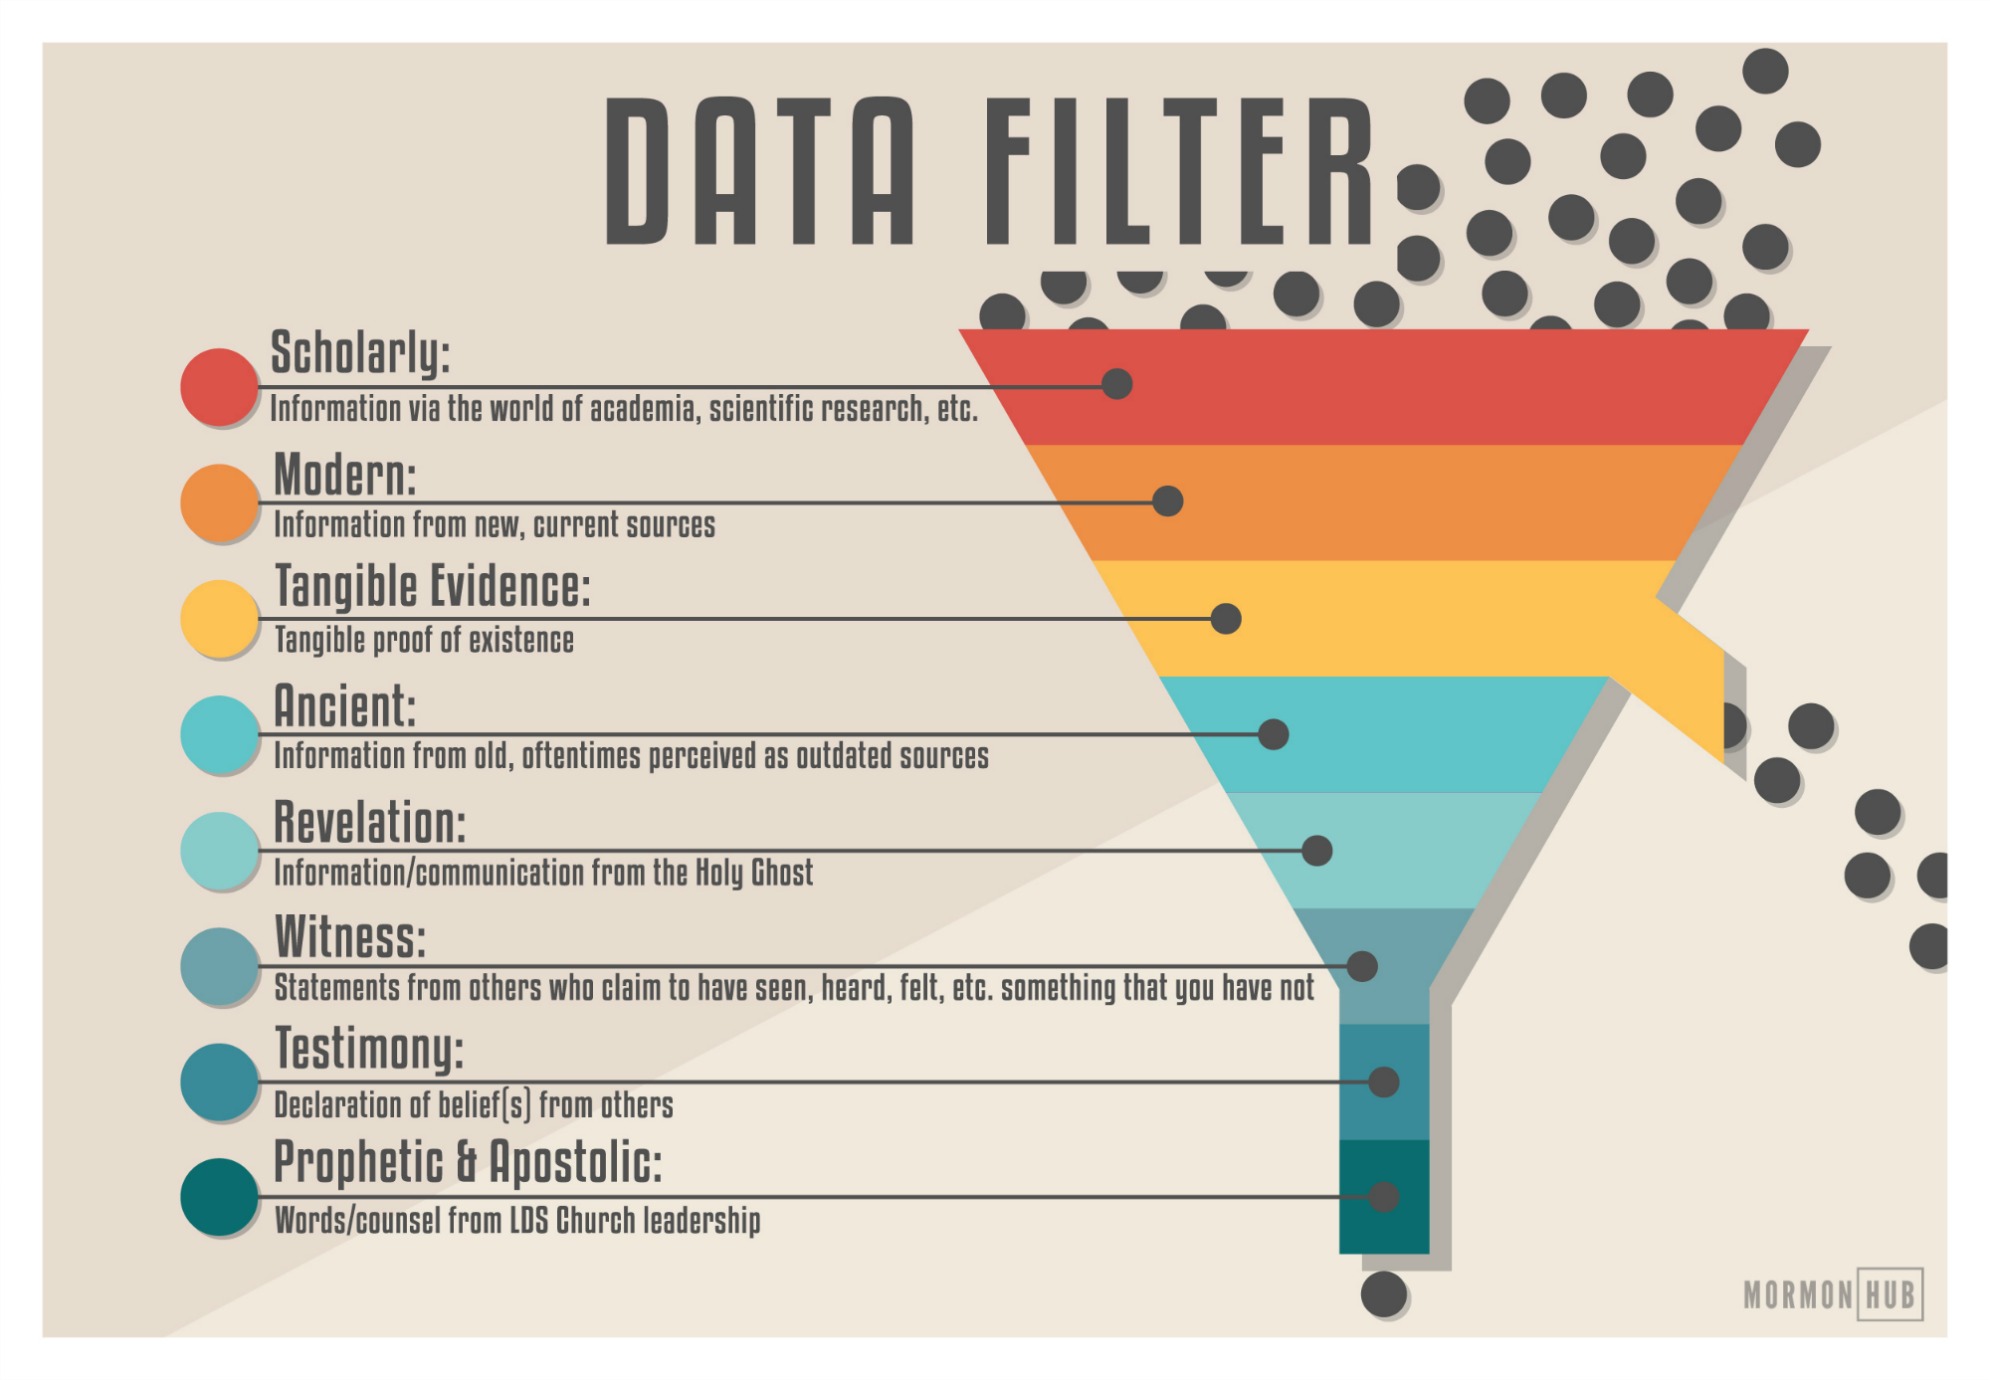 Data filter